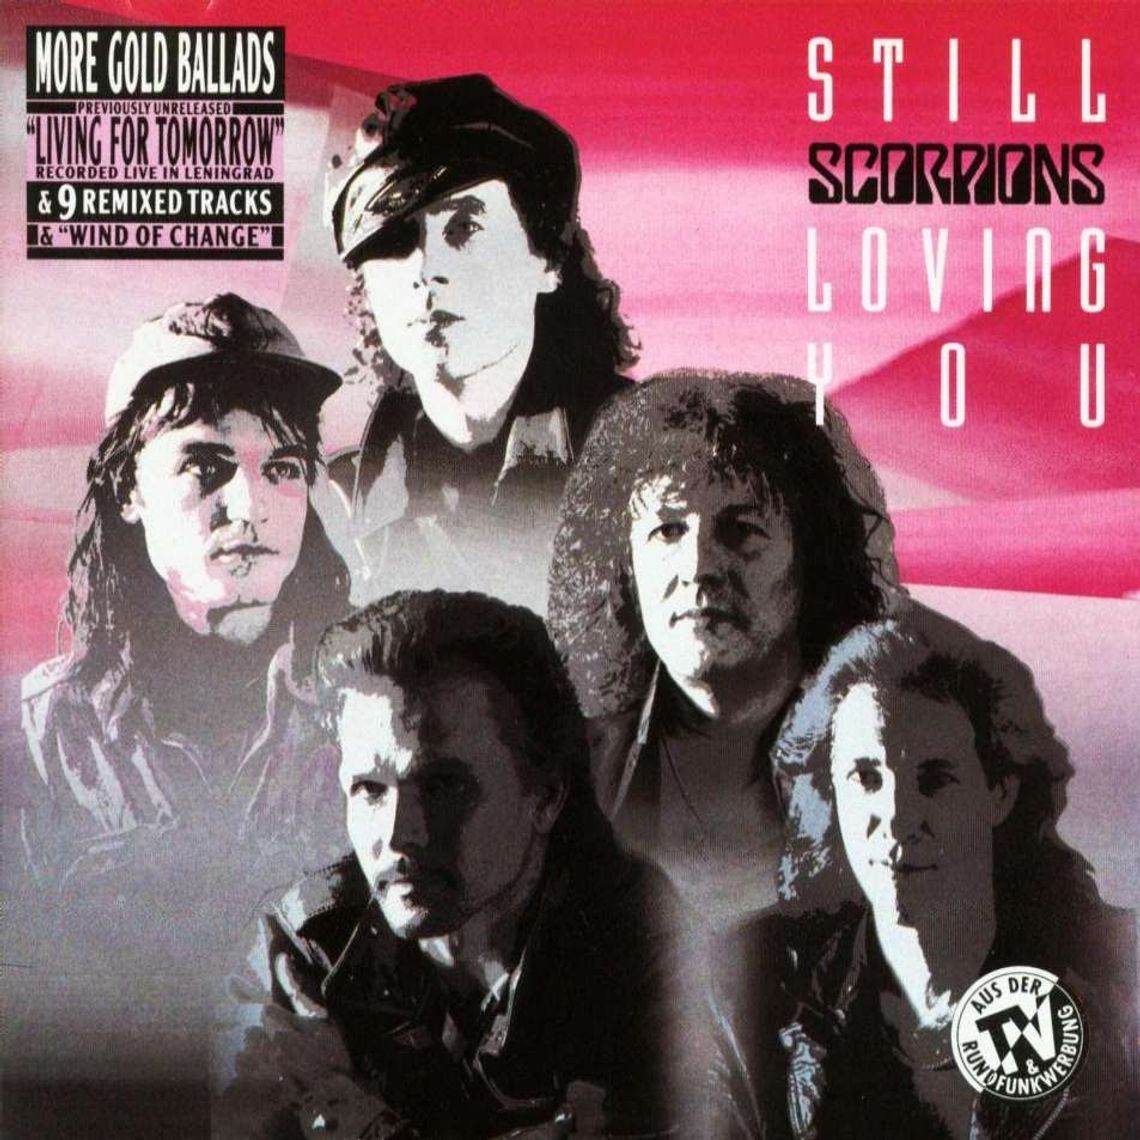 Scorpions "Still lovin' you"